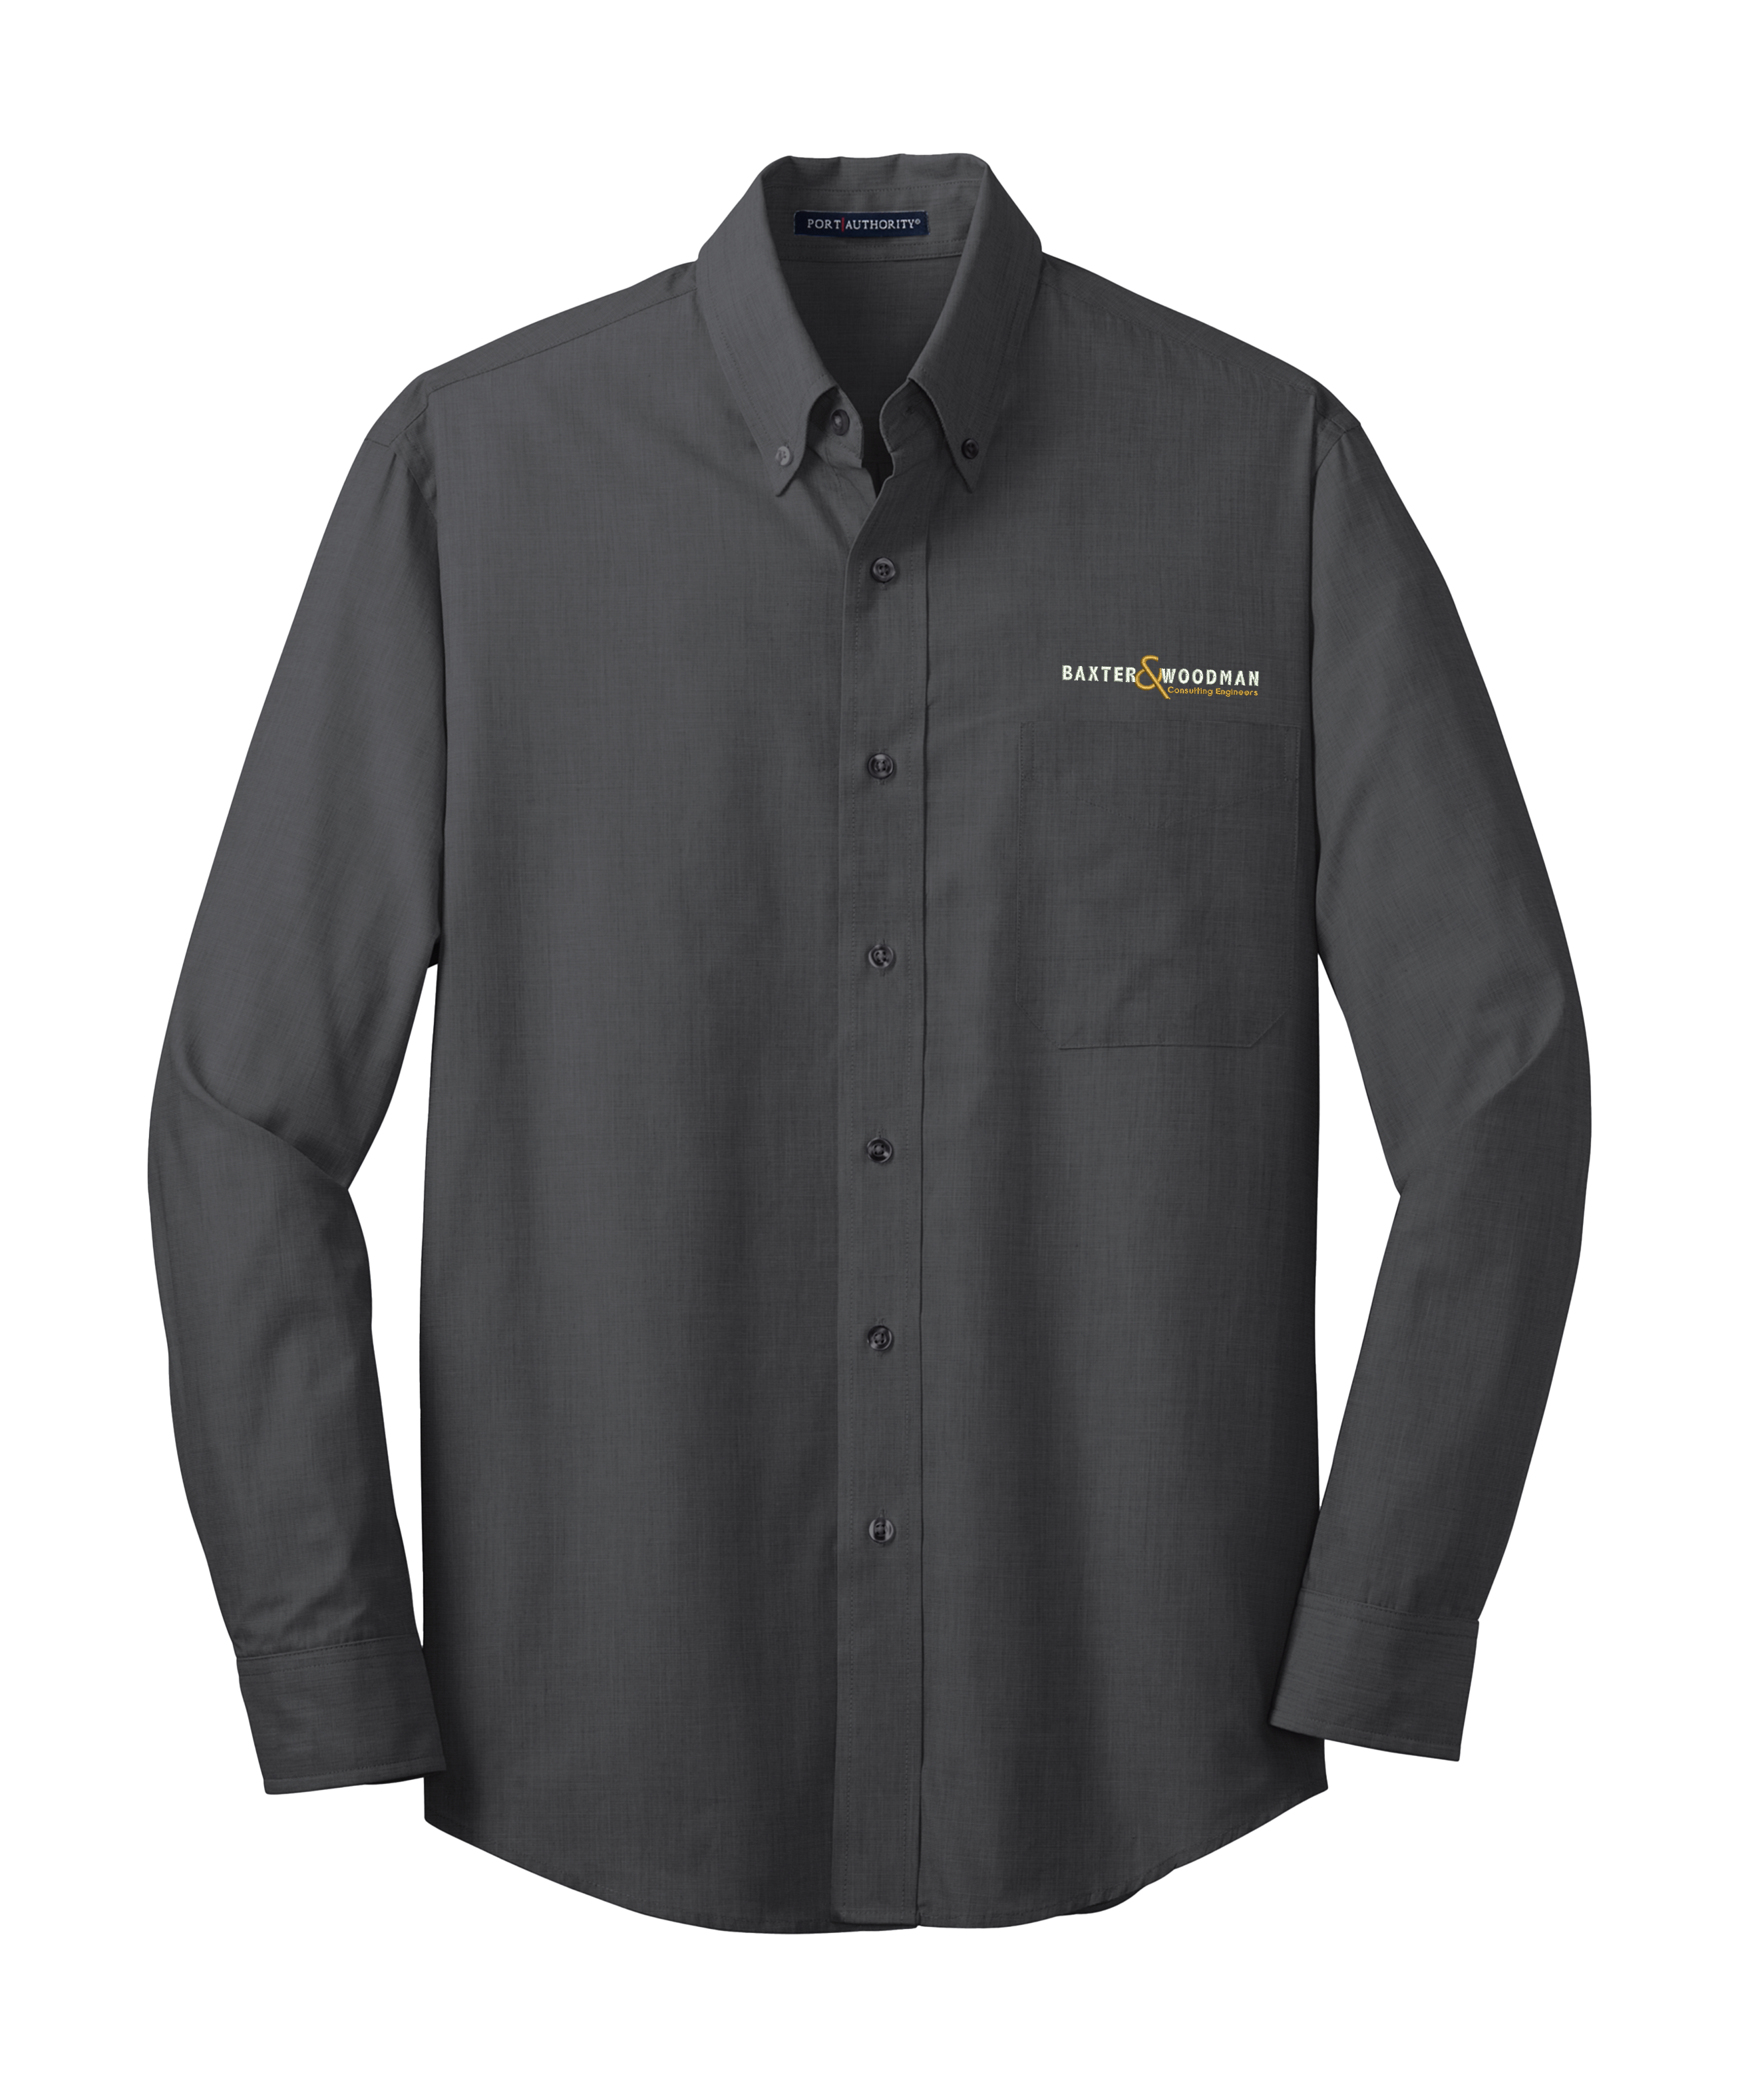 Port Authority® Crosshatch Easy Care Shirt